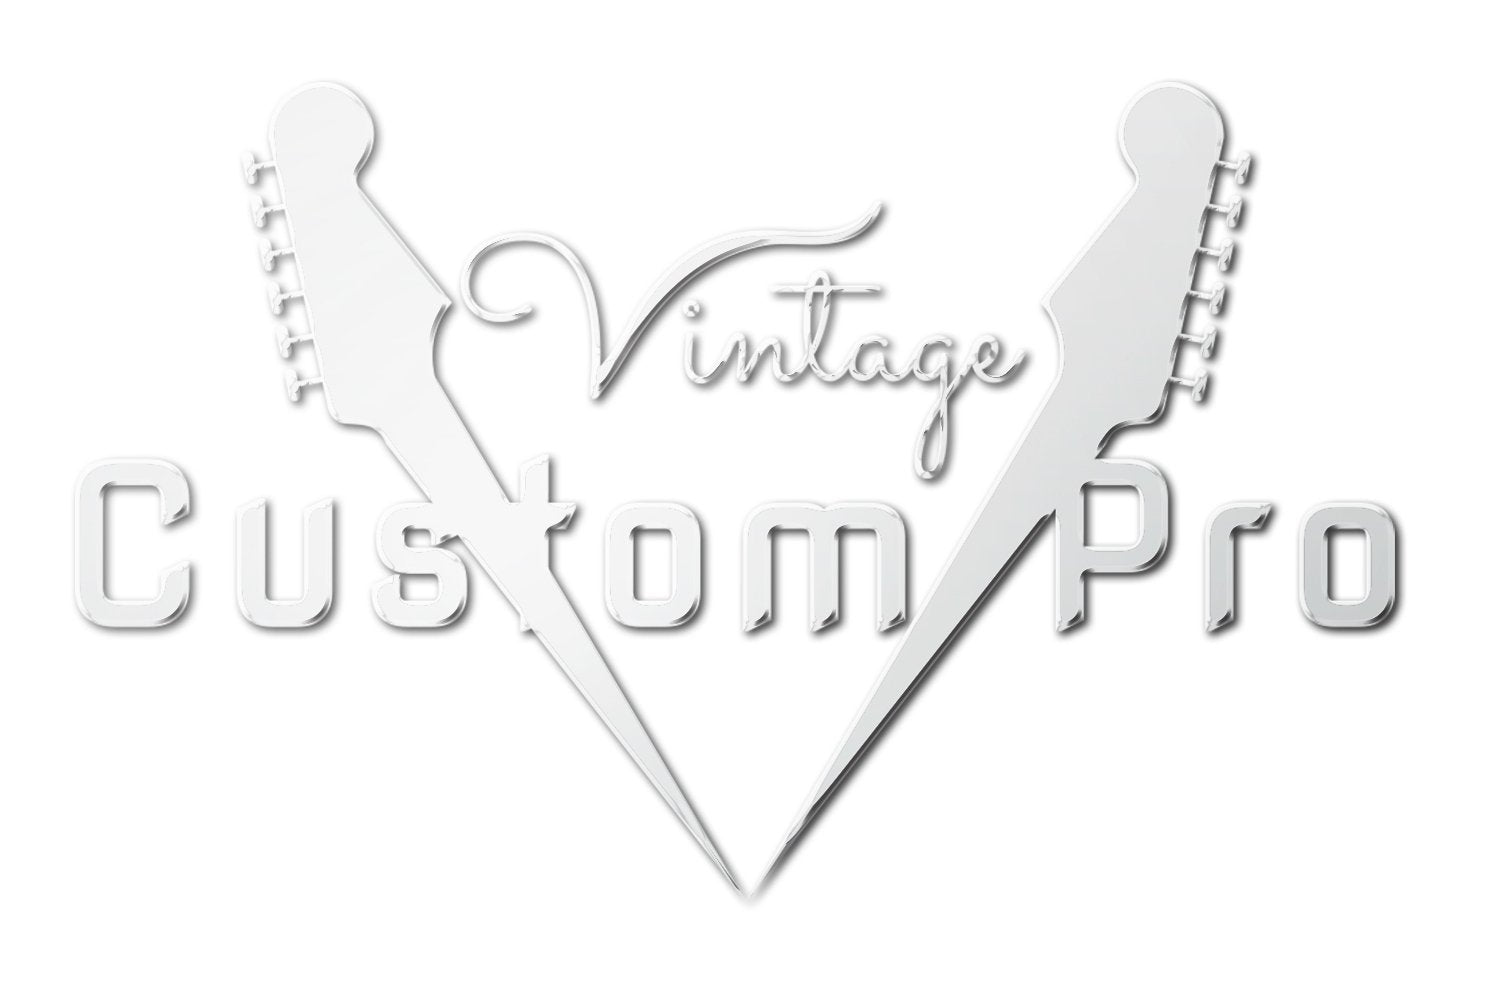 Vintage* V120TB Electric Guitar, Electric Guitar for sale at Richards Guitars.